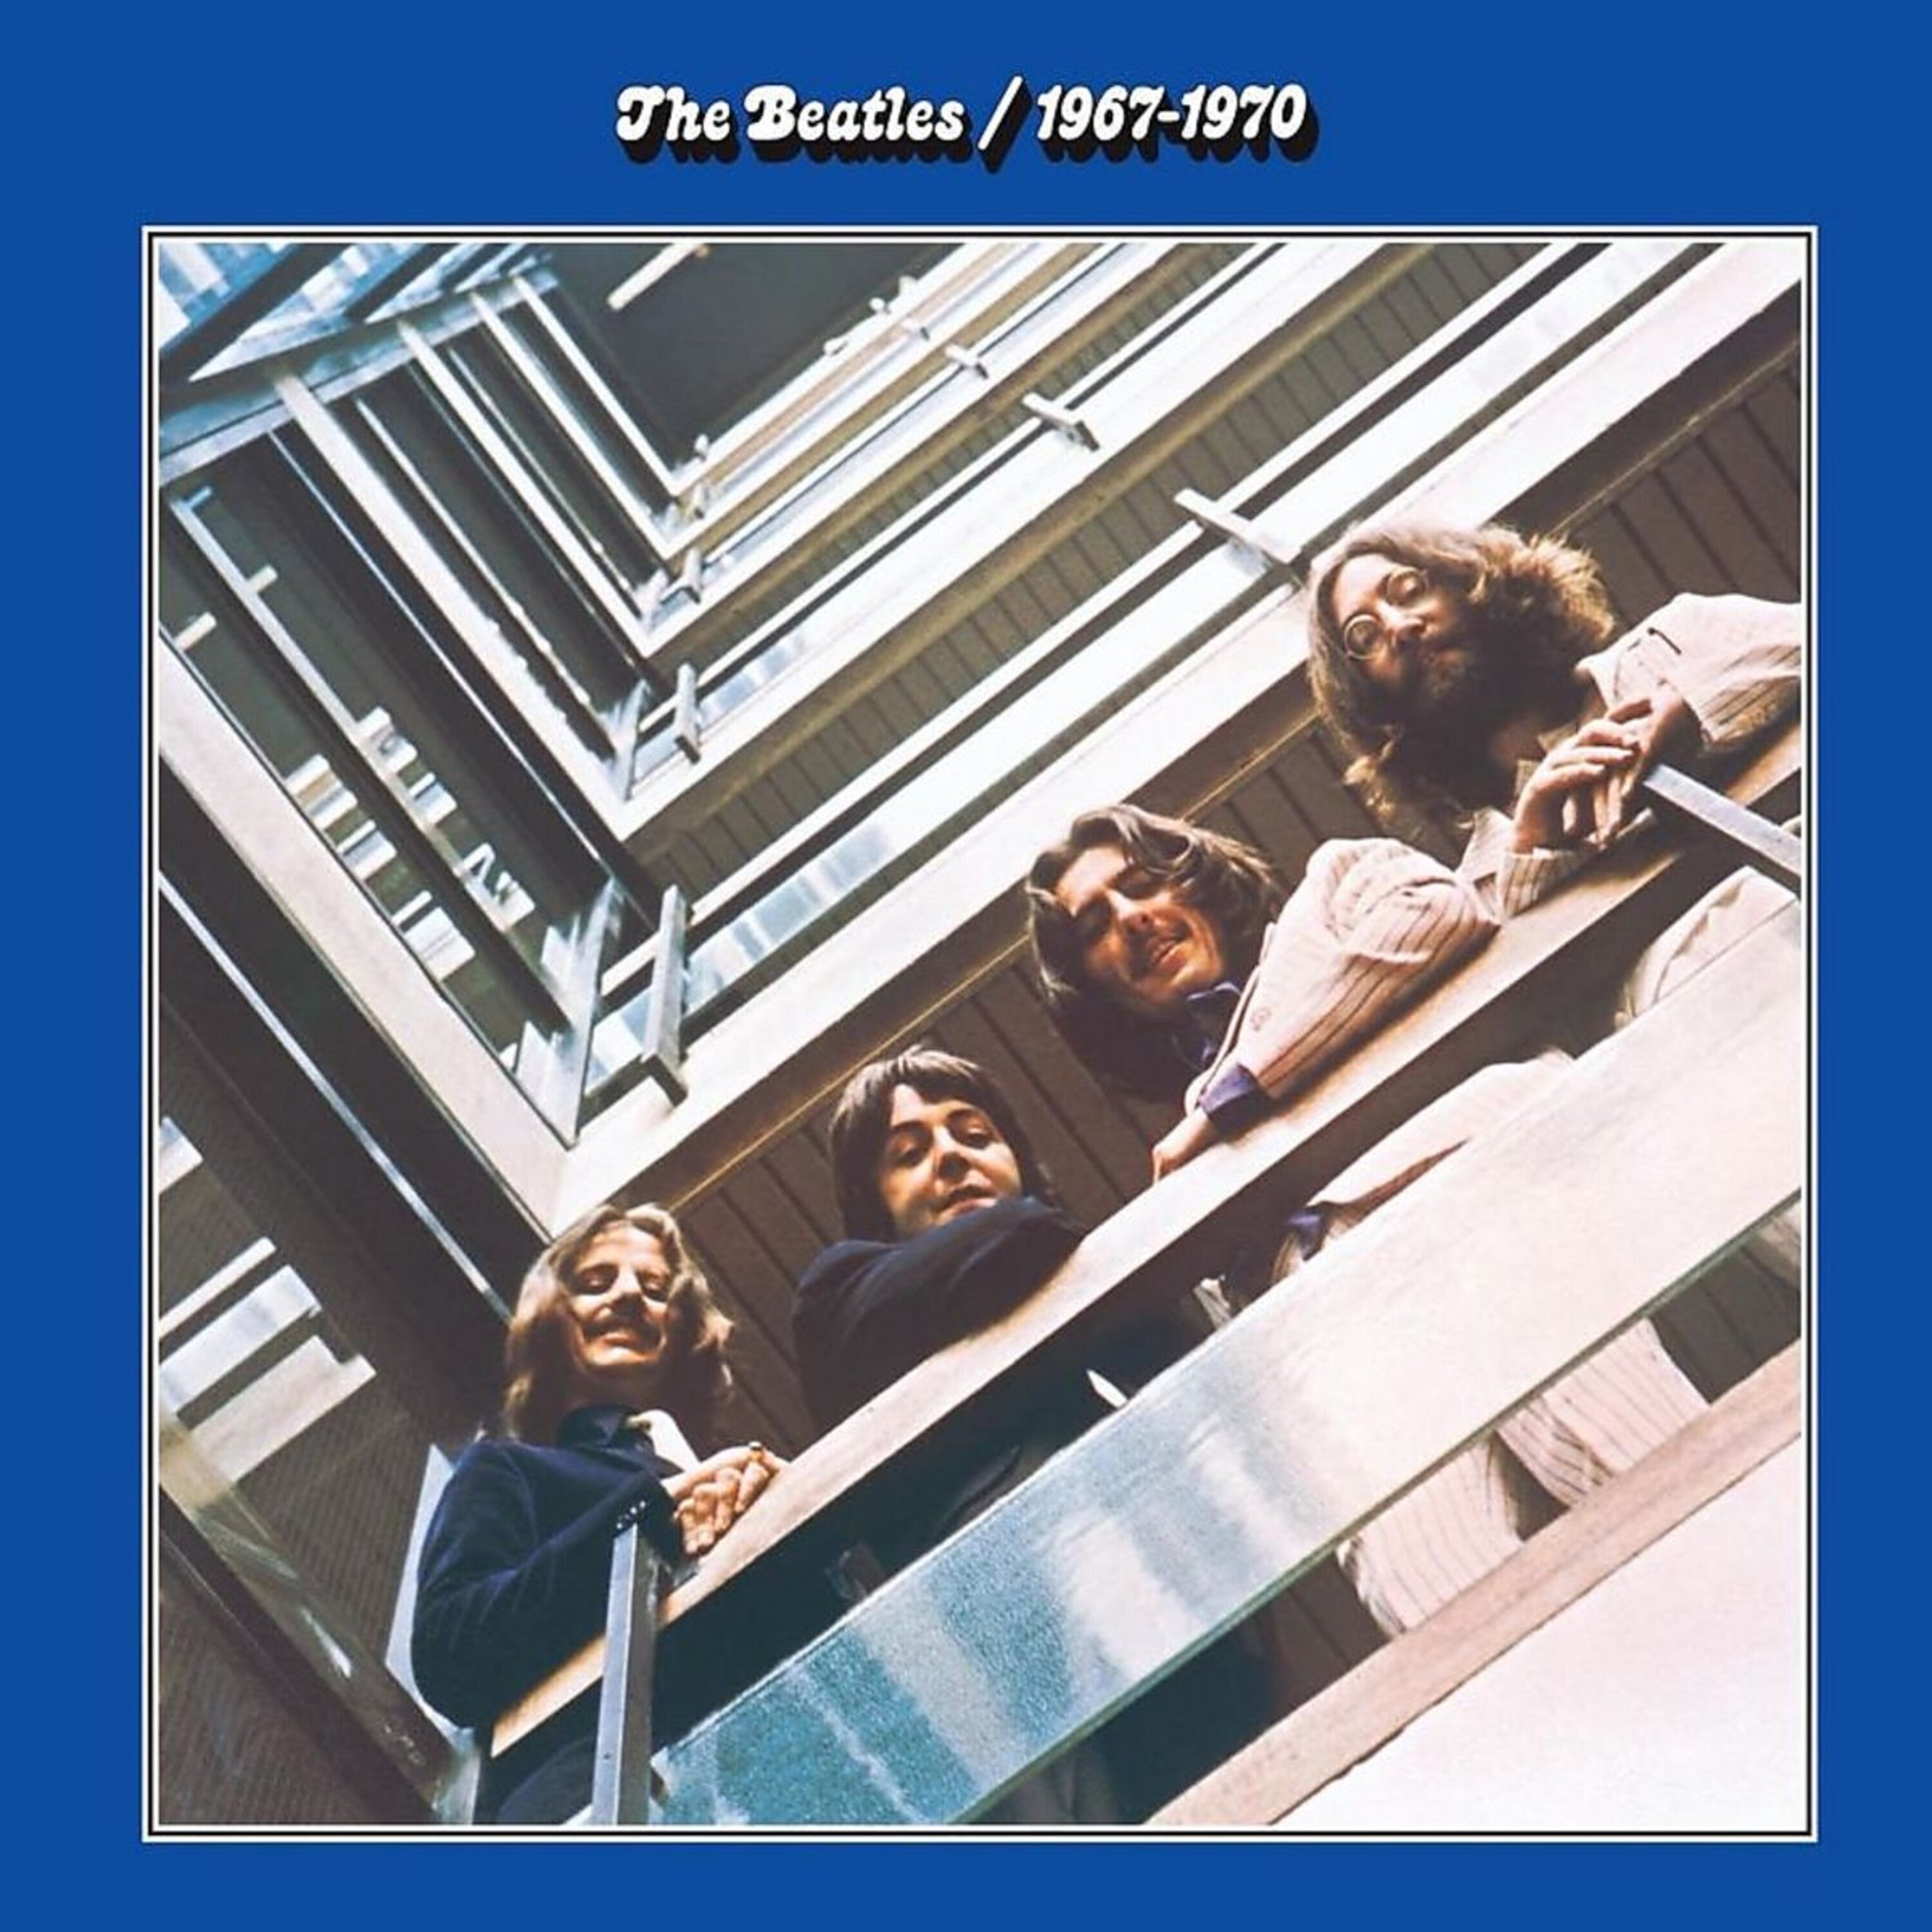 https://images.bravado.de/prod/product-assets/product-asset-data/beatles-the/the-beatles-international-1/products/142365/web/309004/image-thumb__309004__3000x3000_original/The-Beatles-1967-1970-Blue-Vinyl-142365-309004.jpg